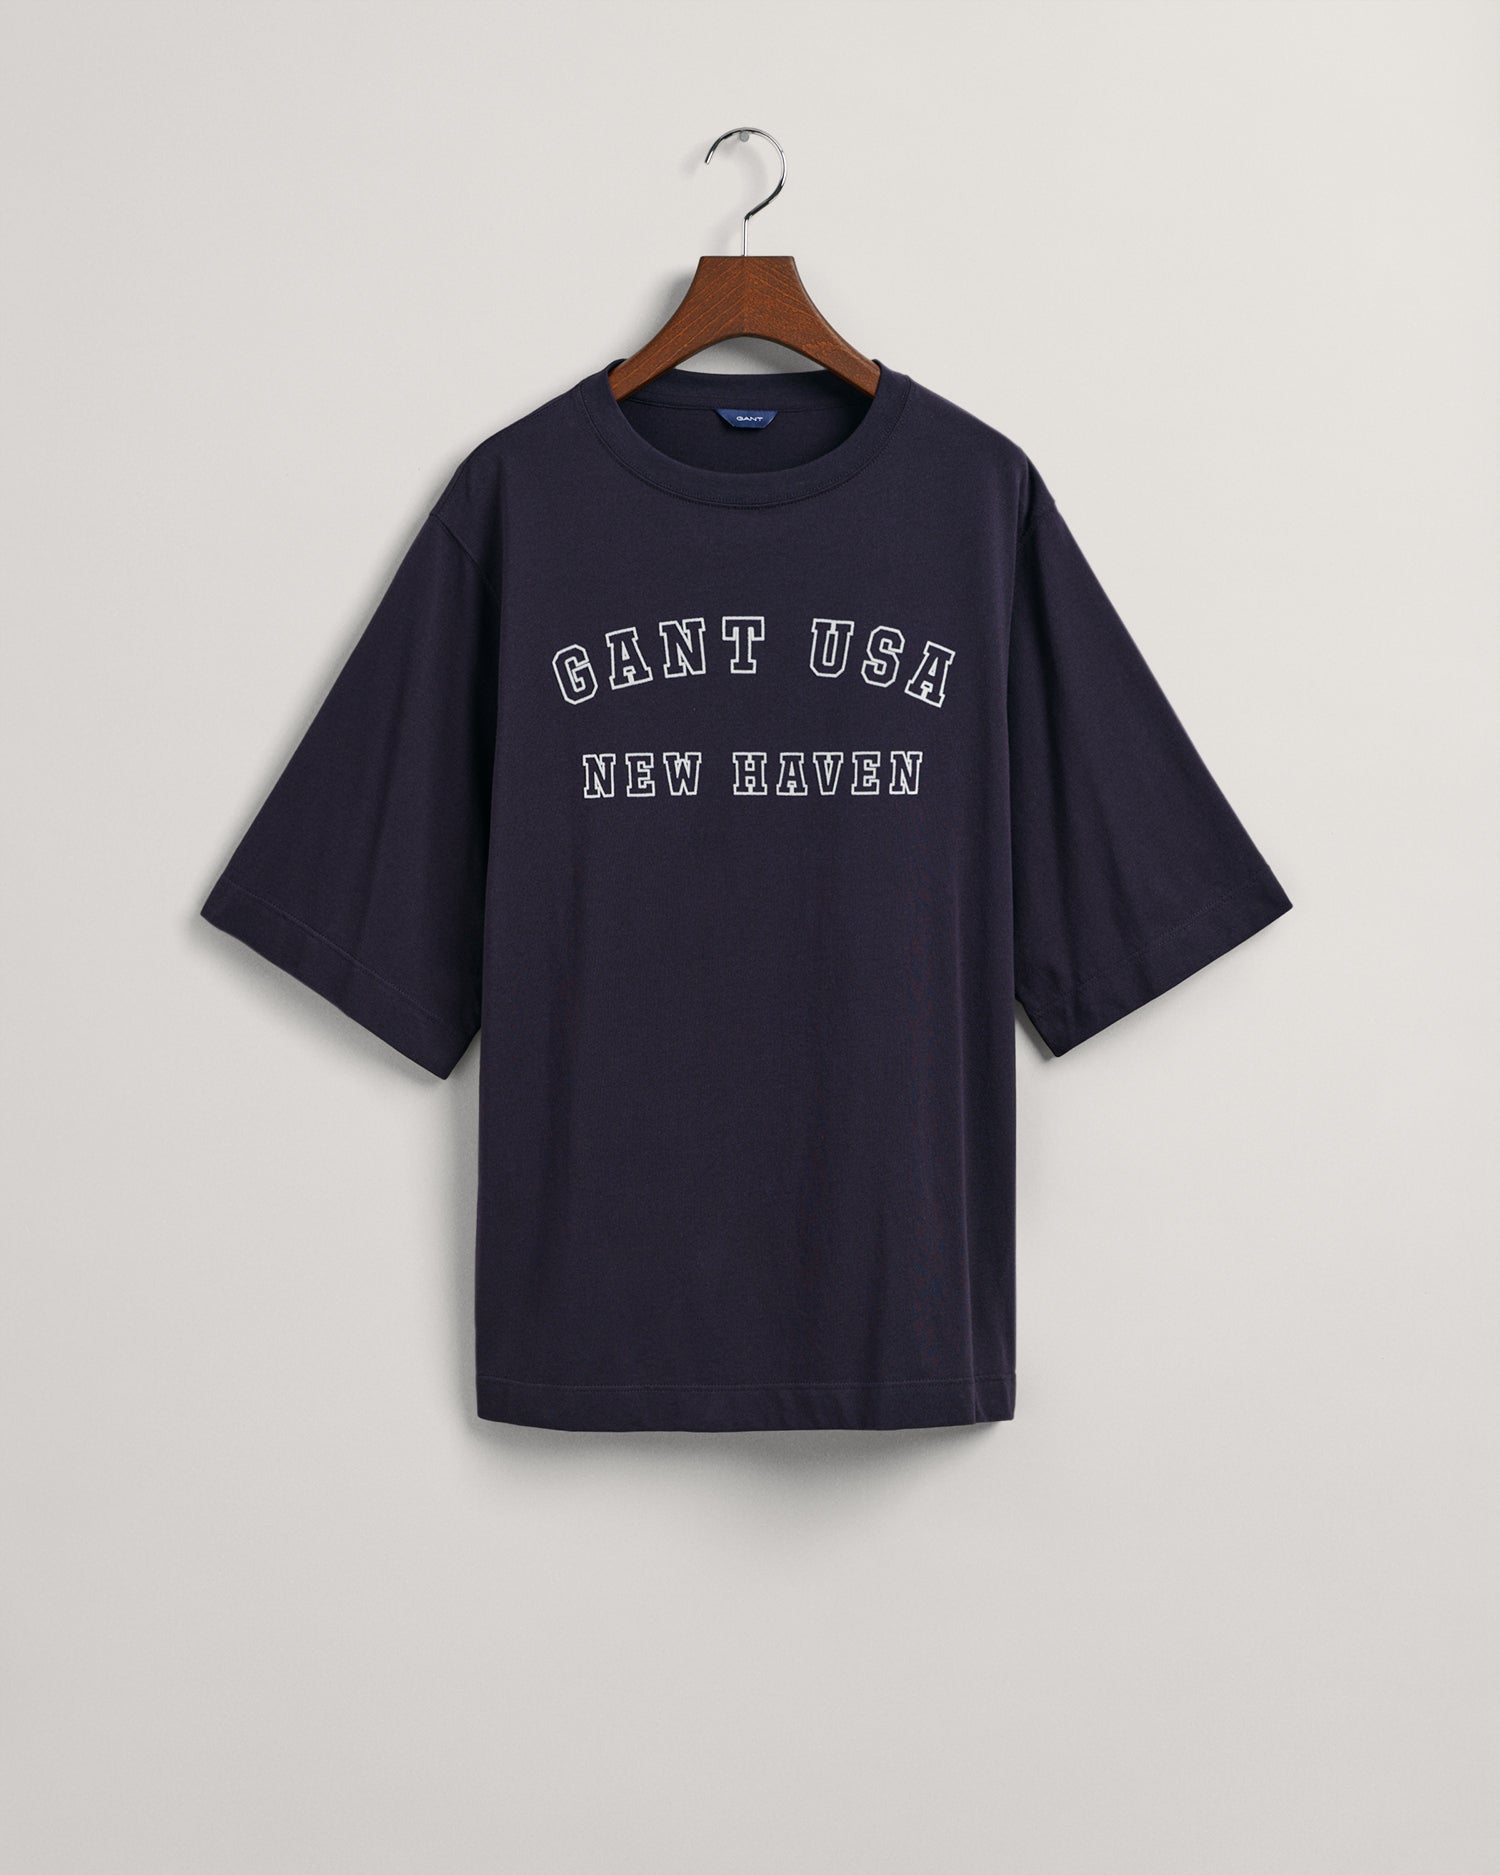 T-Shirt GANT USA (Outlet)